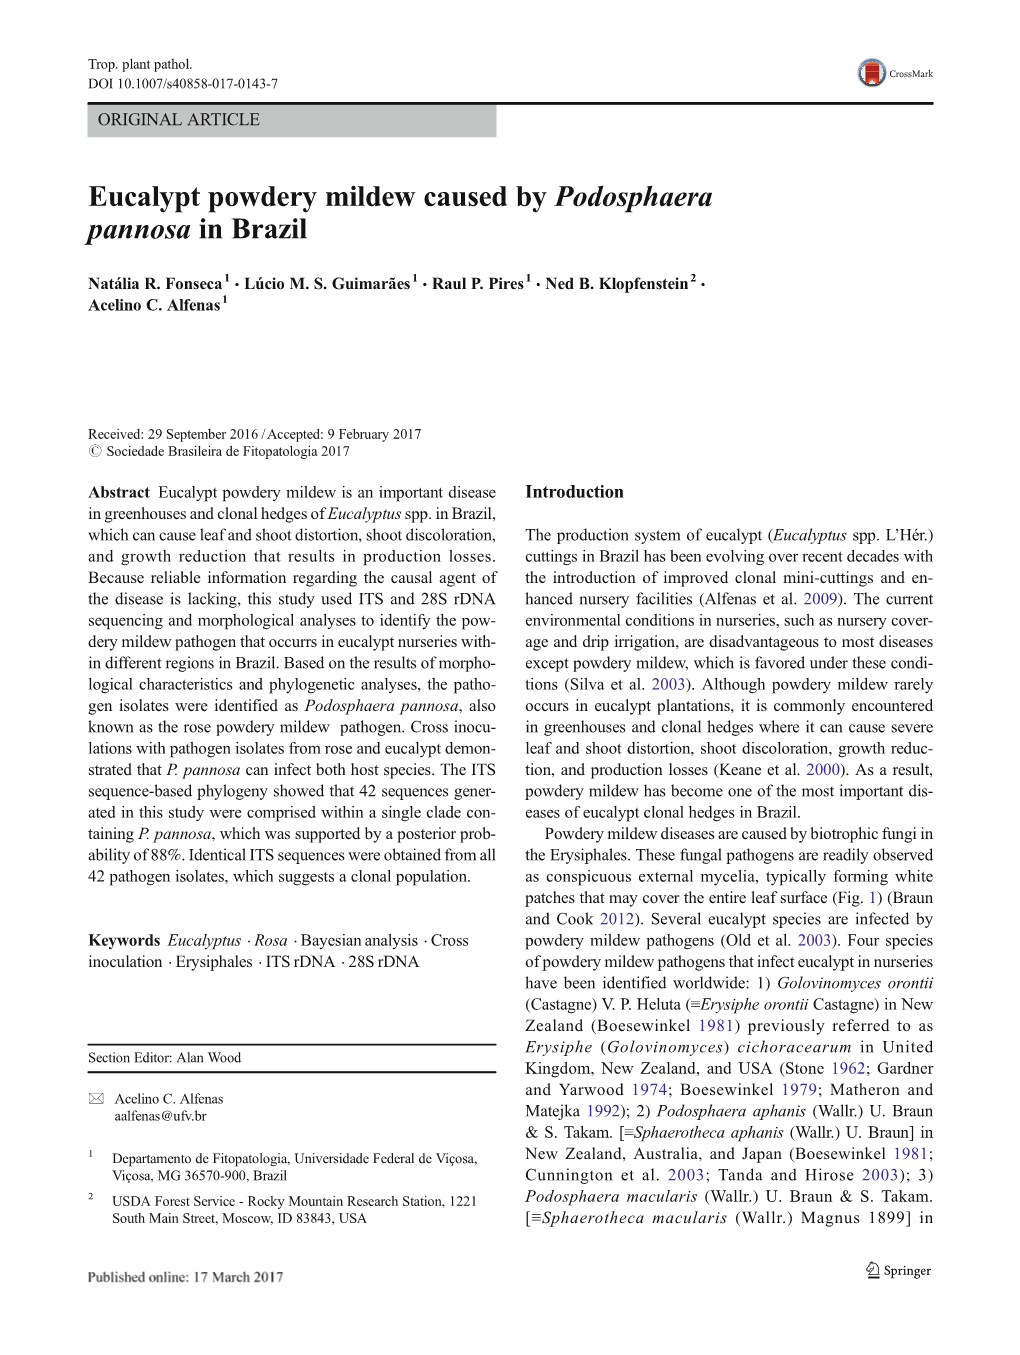 Eucalypt Powdery Mildew Caused by Podosphaera Pannosa in Brazil